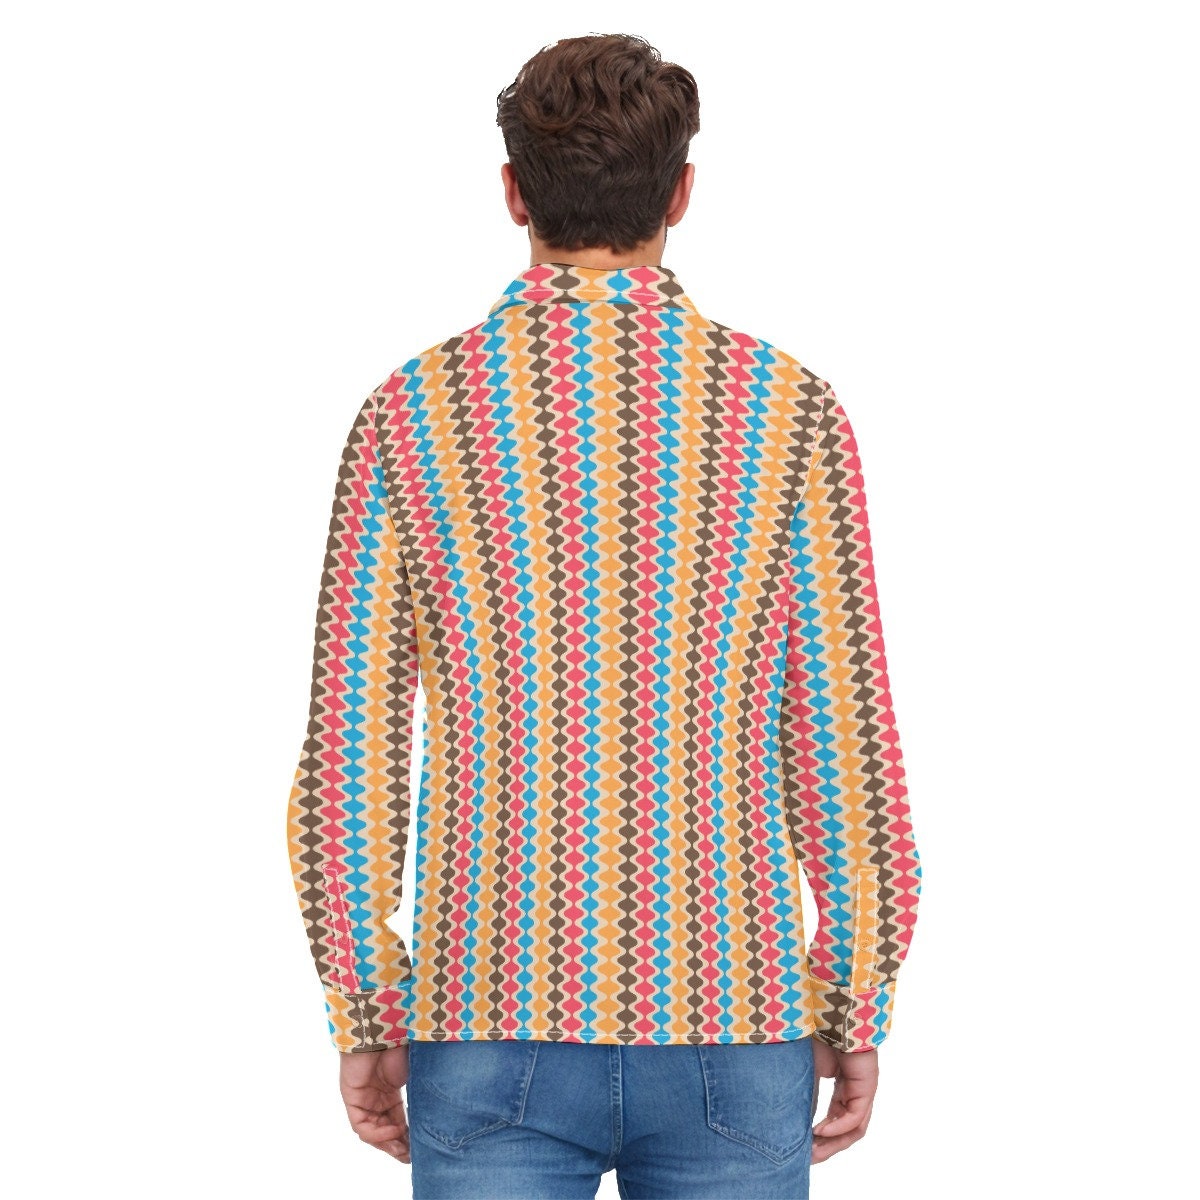 Vintage 70s style shirt, Groovy Stripe Shirt Men, 70s clothing Men, Retro Shirt Men, Hippie Shirt Men, 70s Shirt Men, 70s inspired shirt